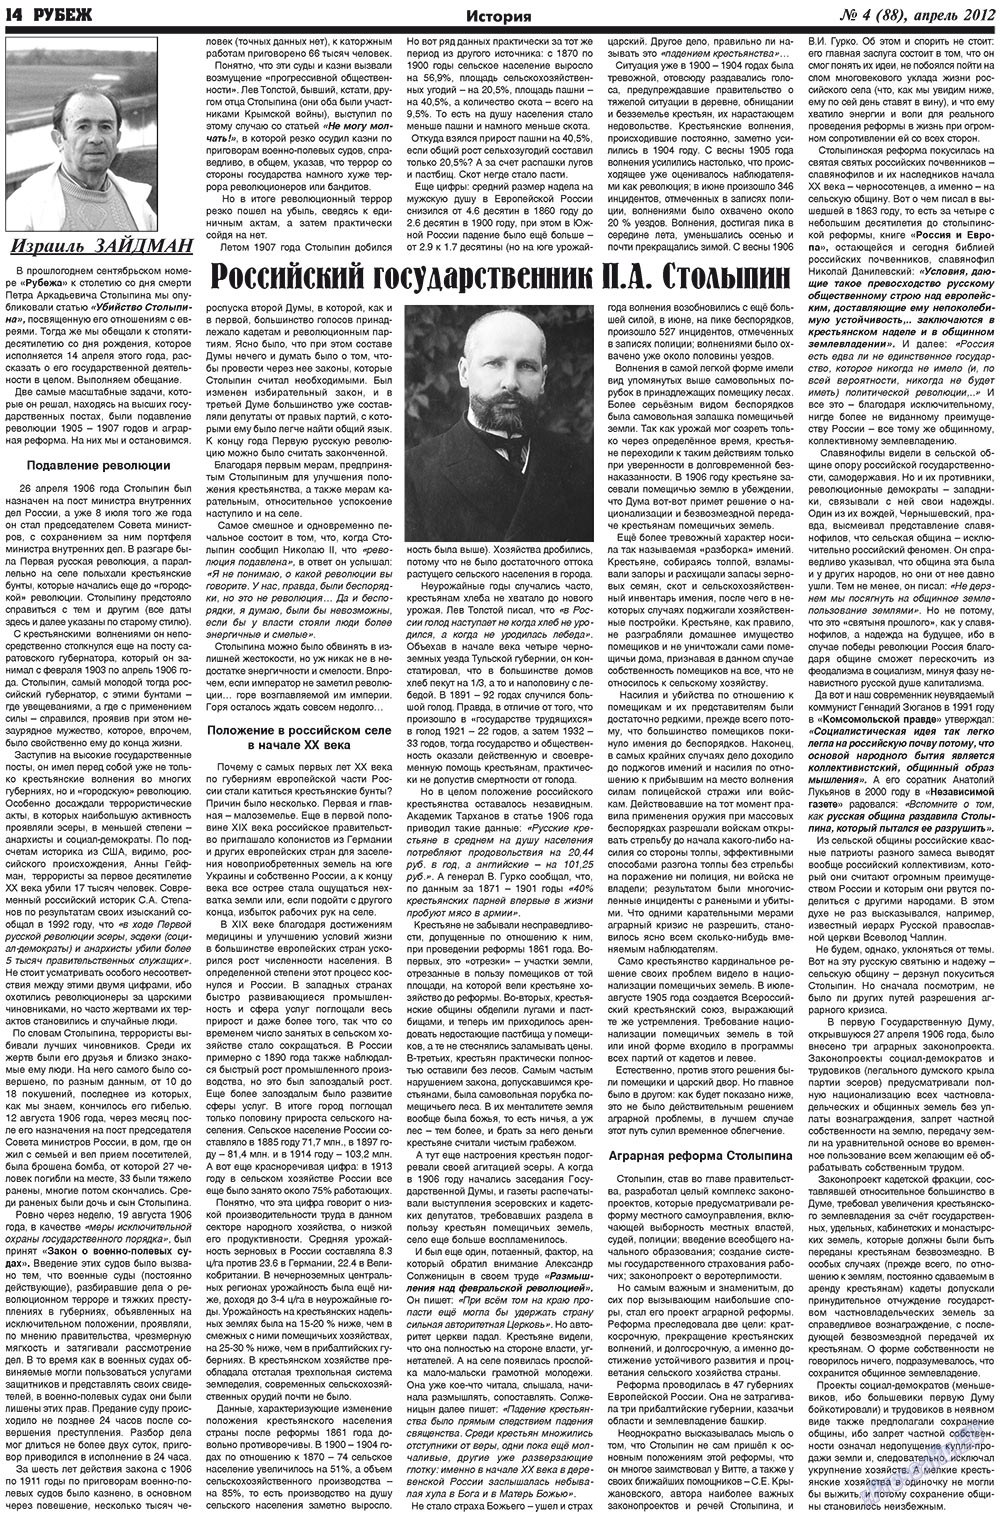 Рубеж, газета. 2012 №4 стр.14